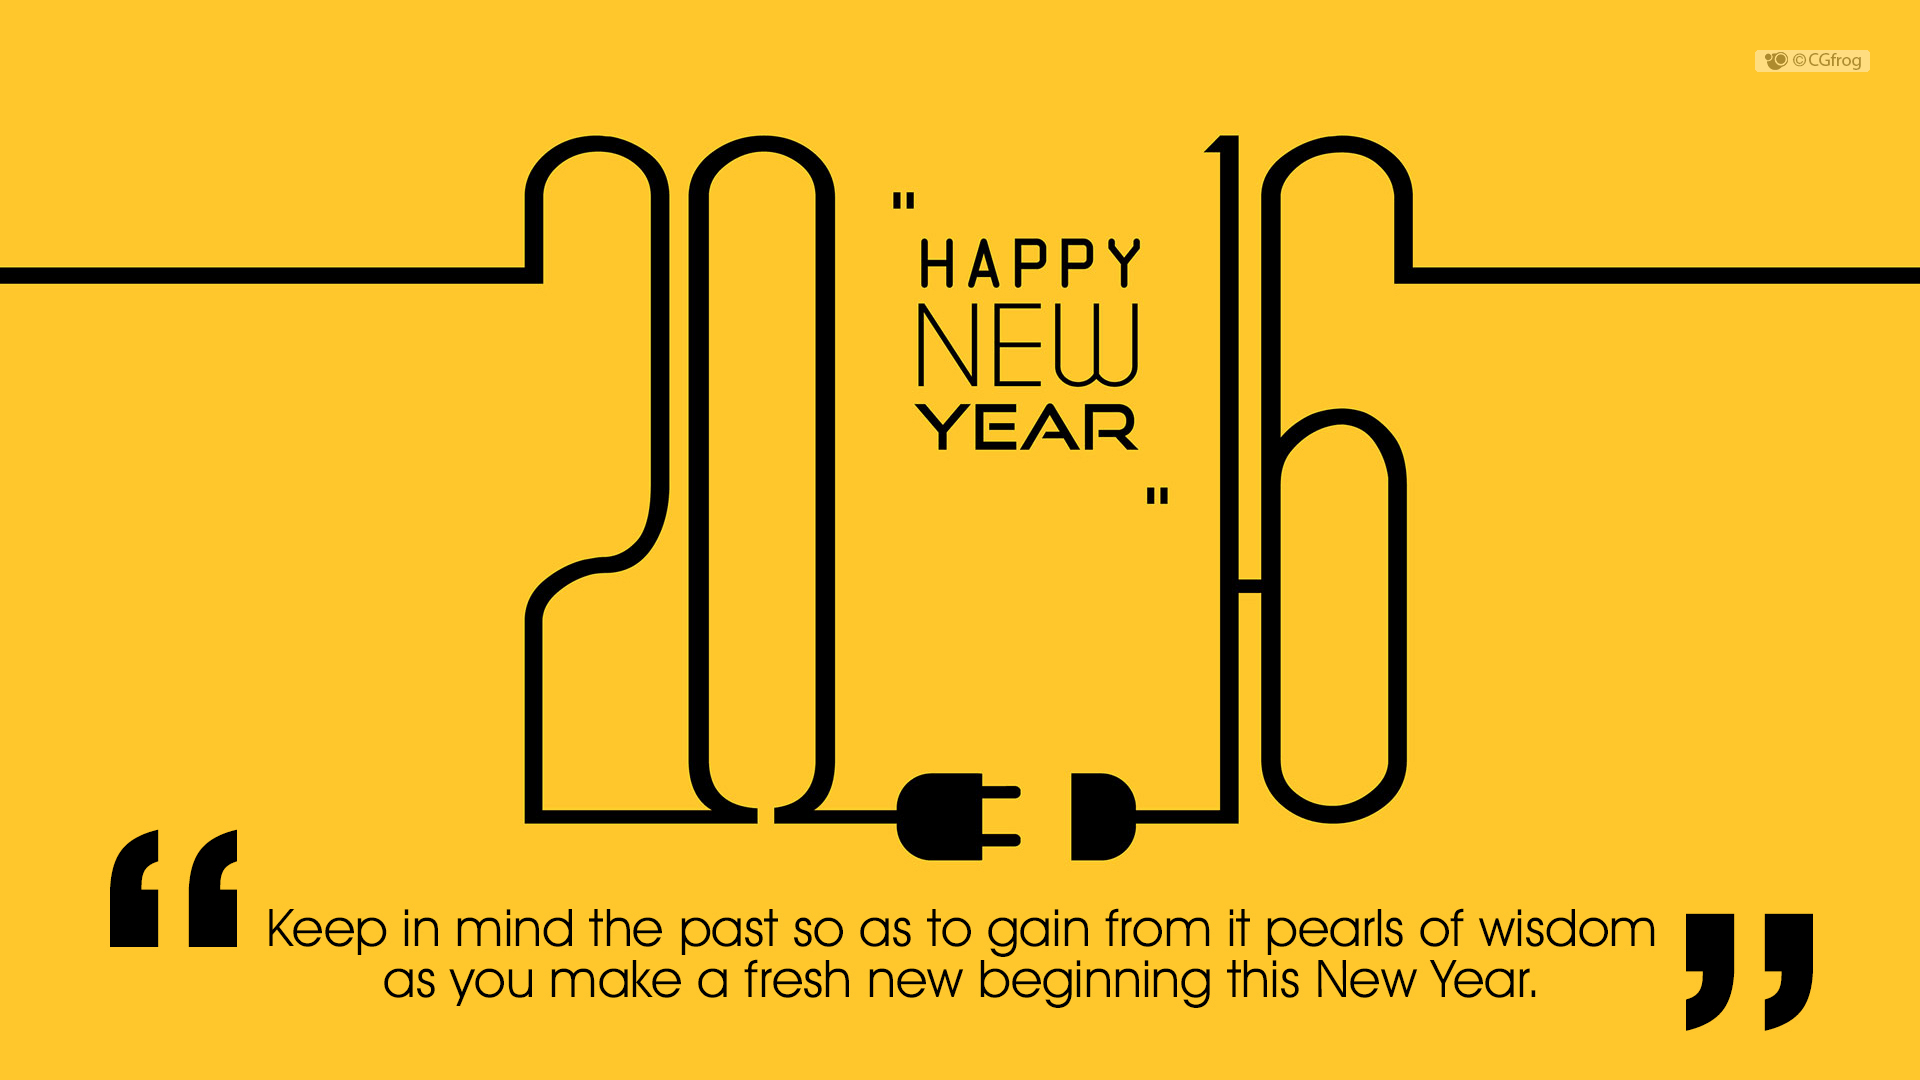 17-Best-Happy-New-Year-2016-HD-Wallpaper-CGfrog